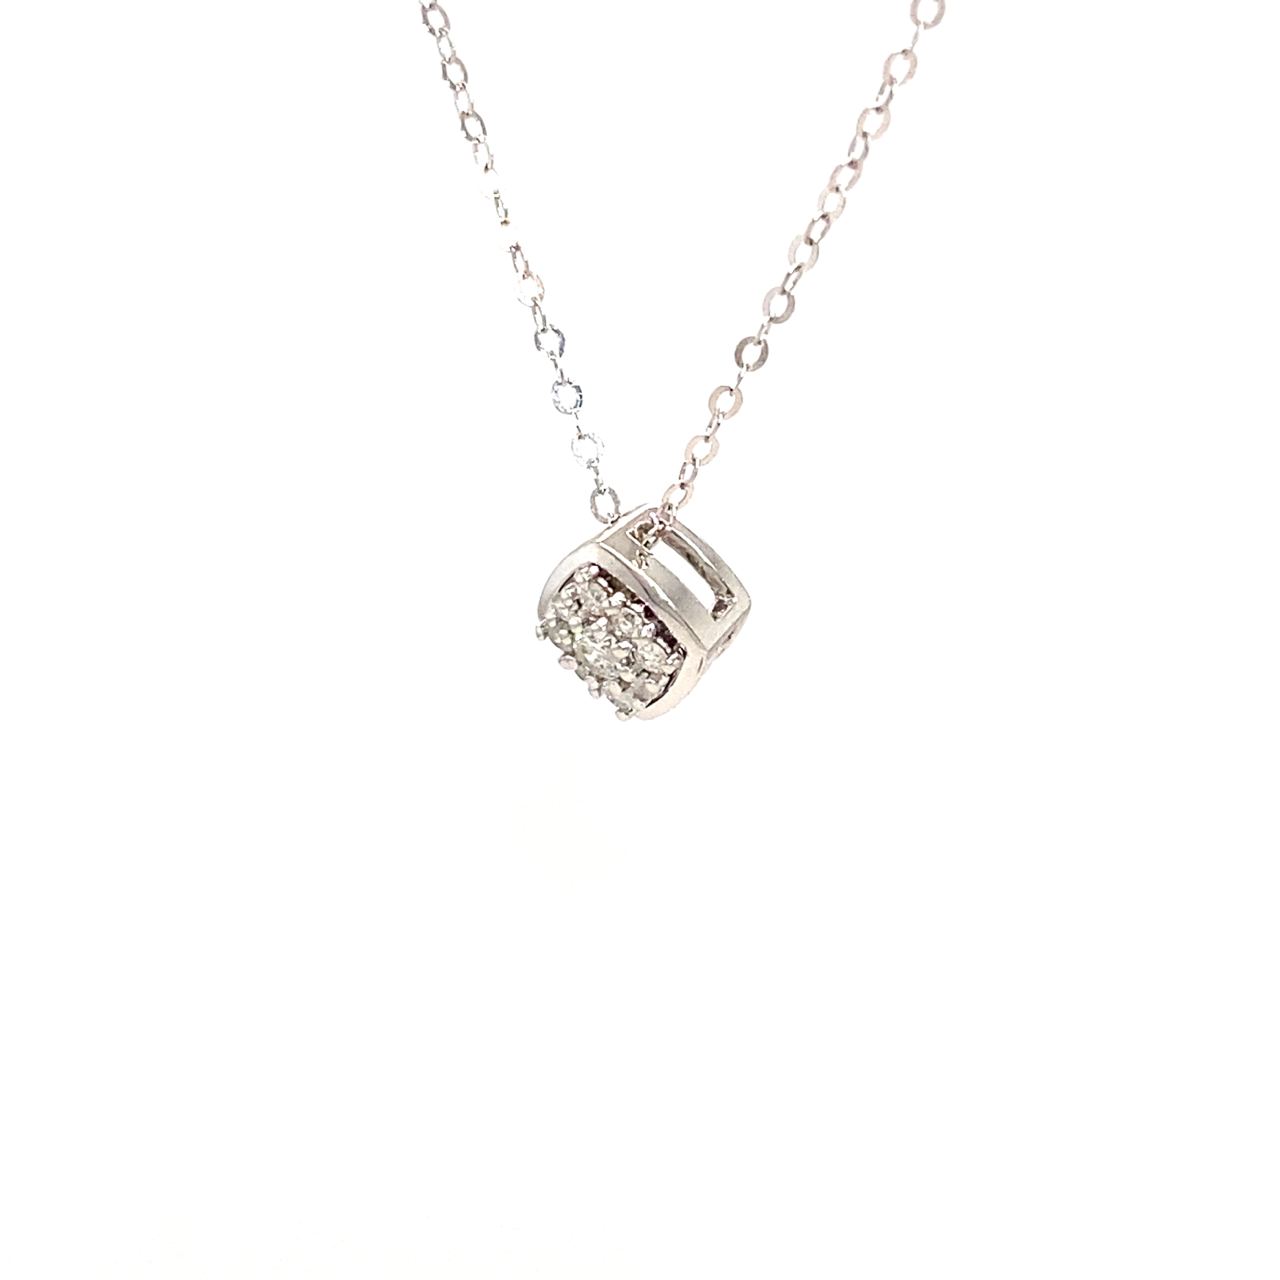 18K White Gold Square Style Diamond Necklace